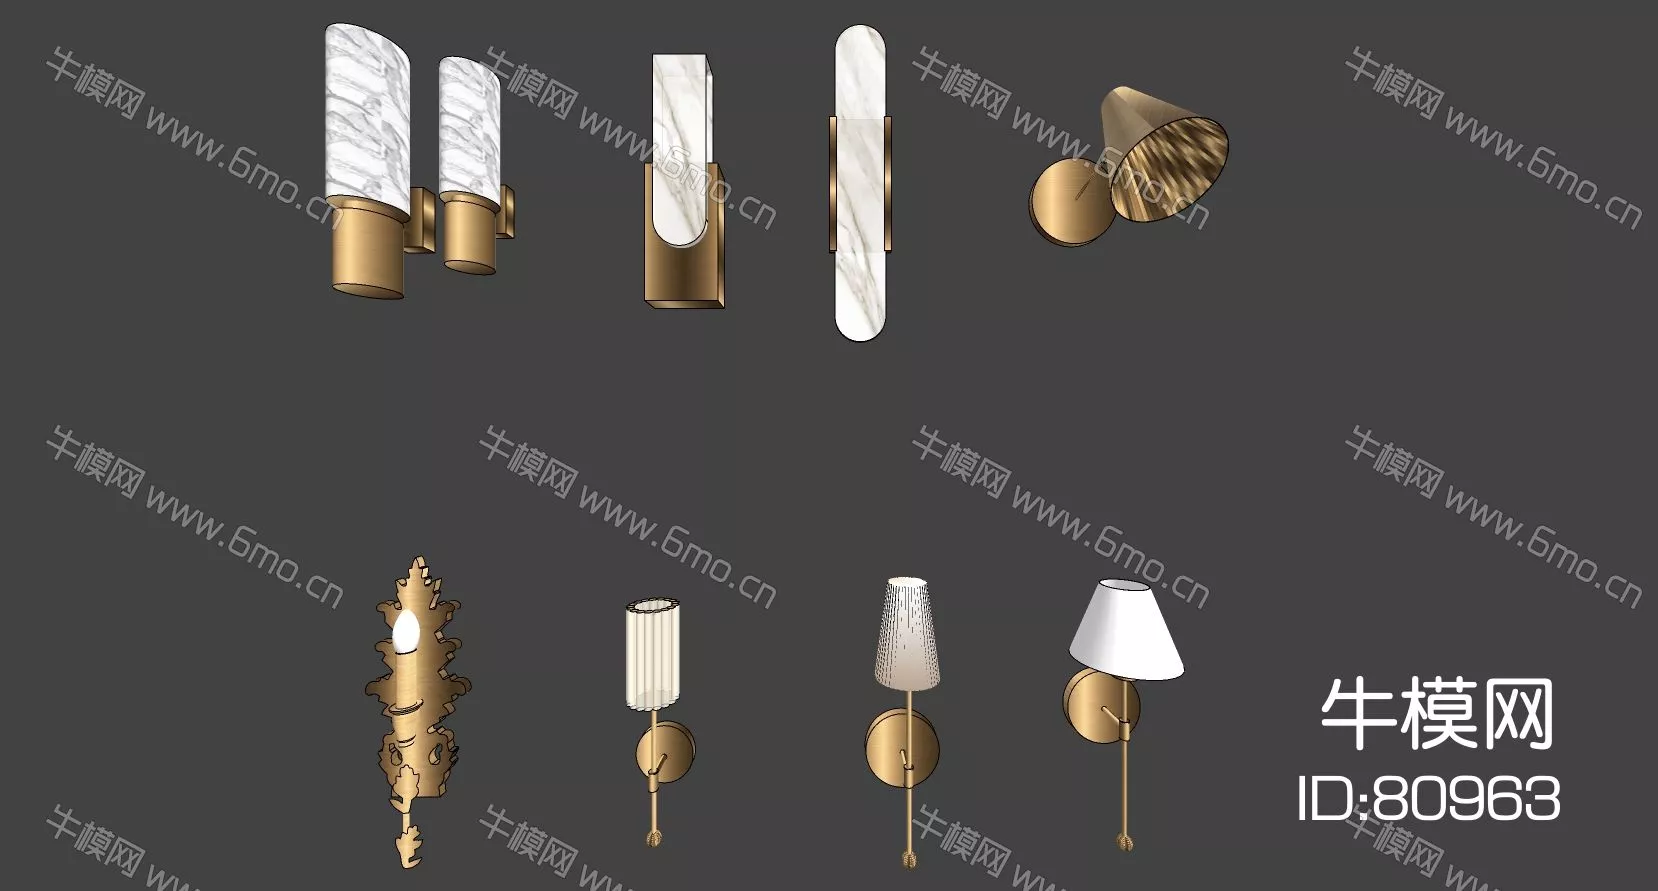 AMERICAN WALL LAMP - SKETCHUP 3D MODEL - ENSCAPE - 80963